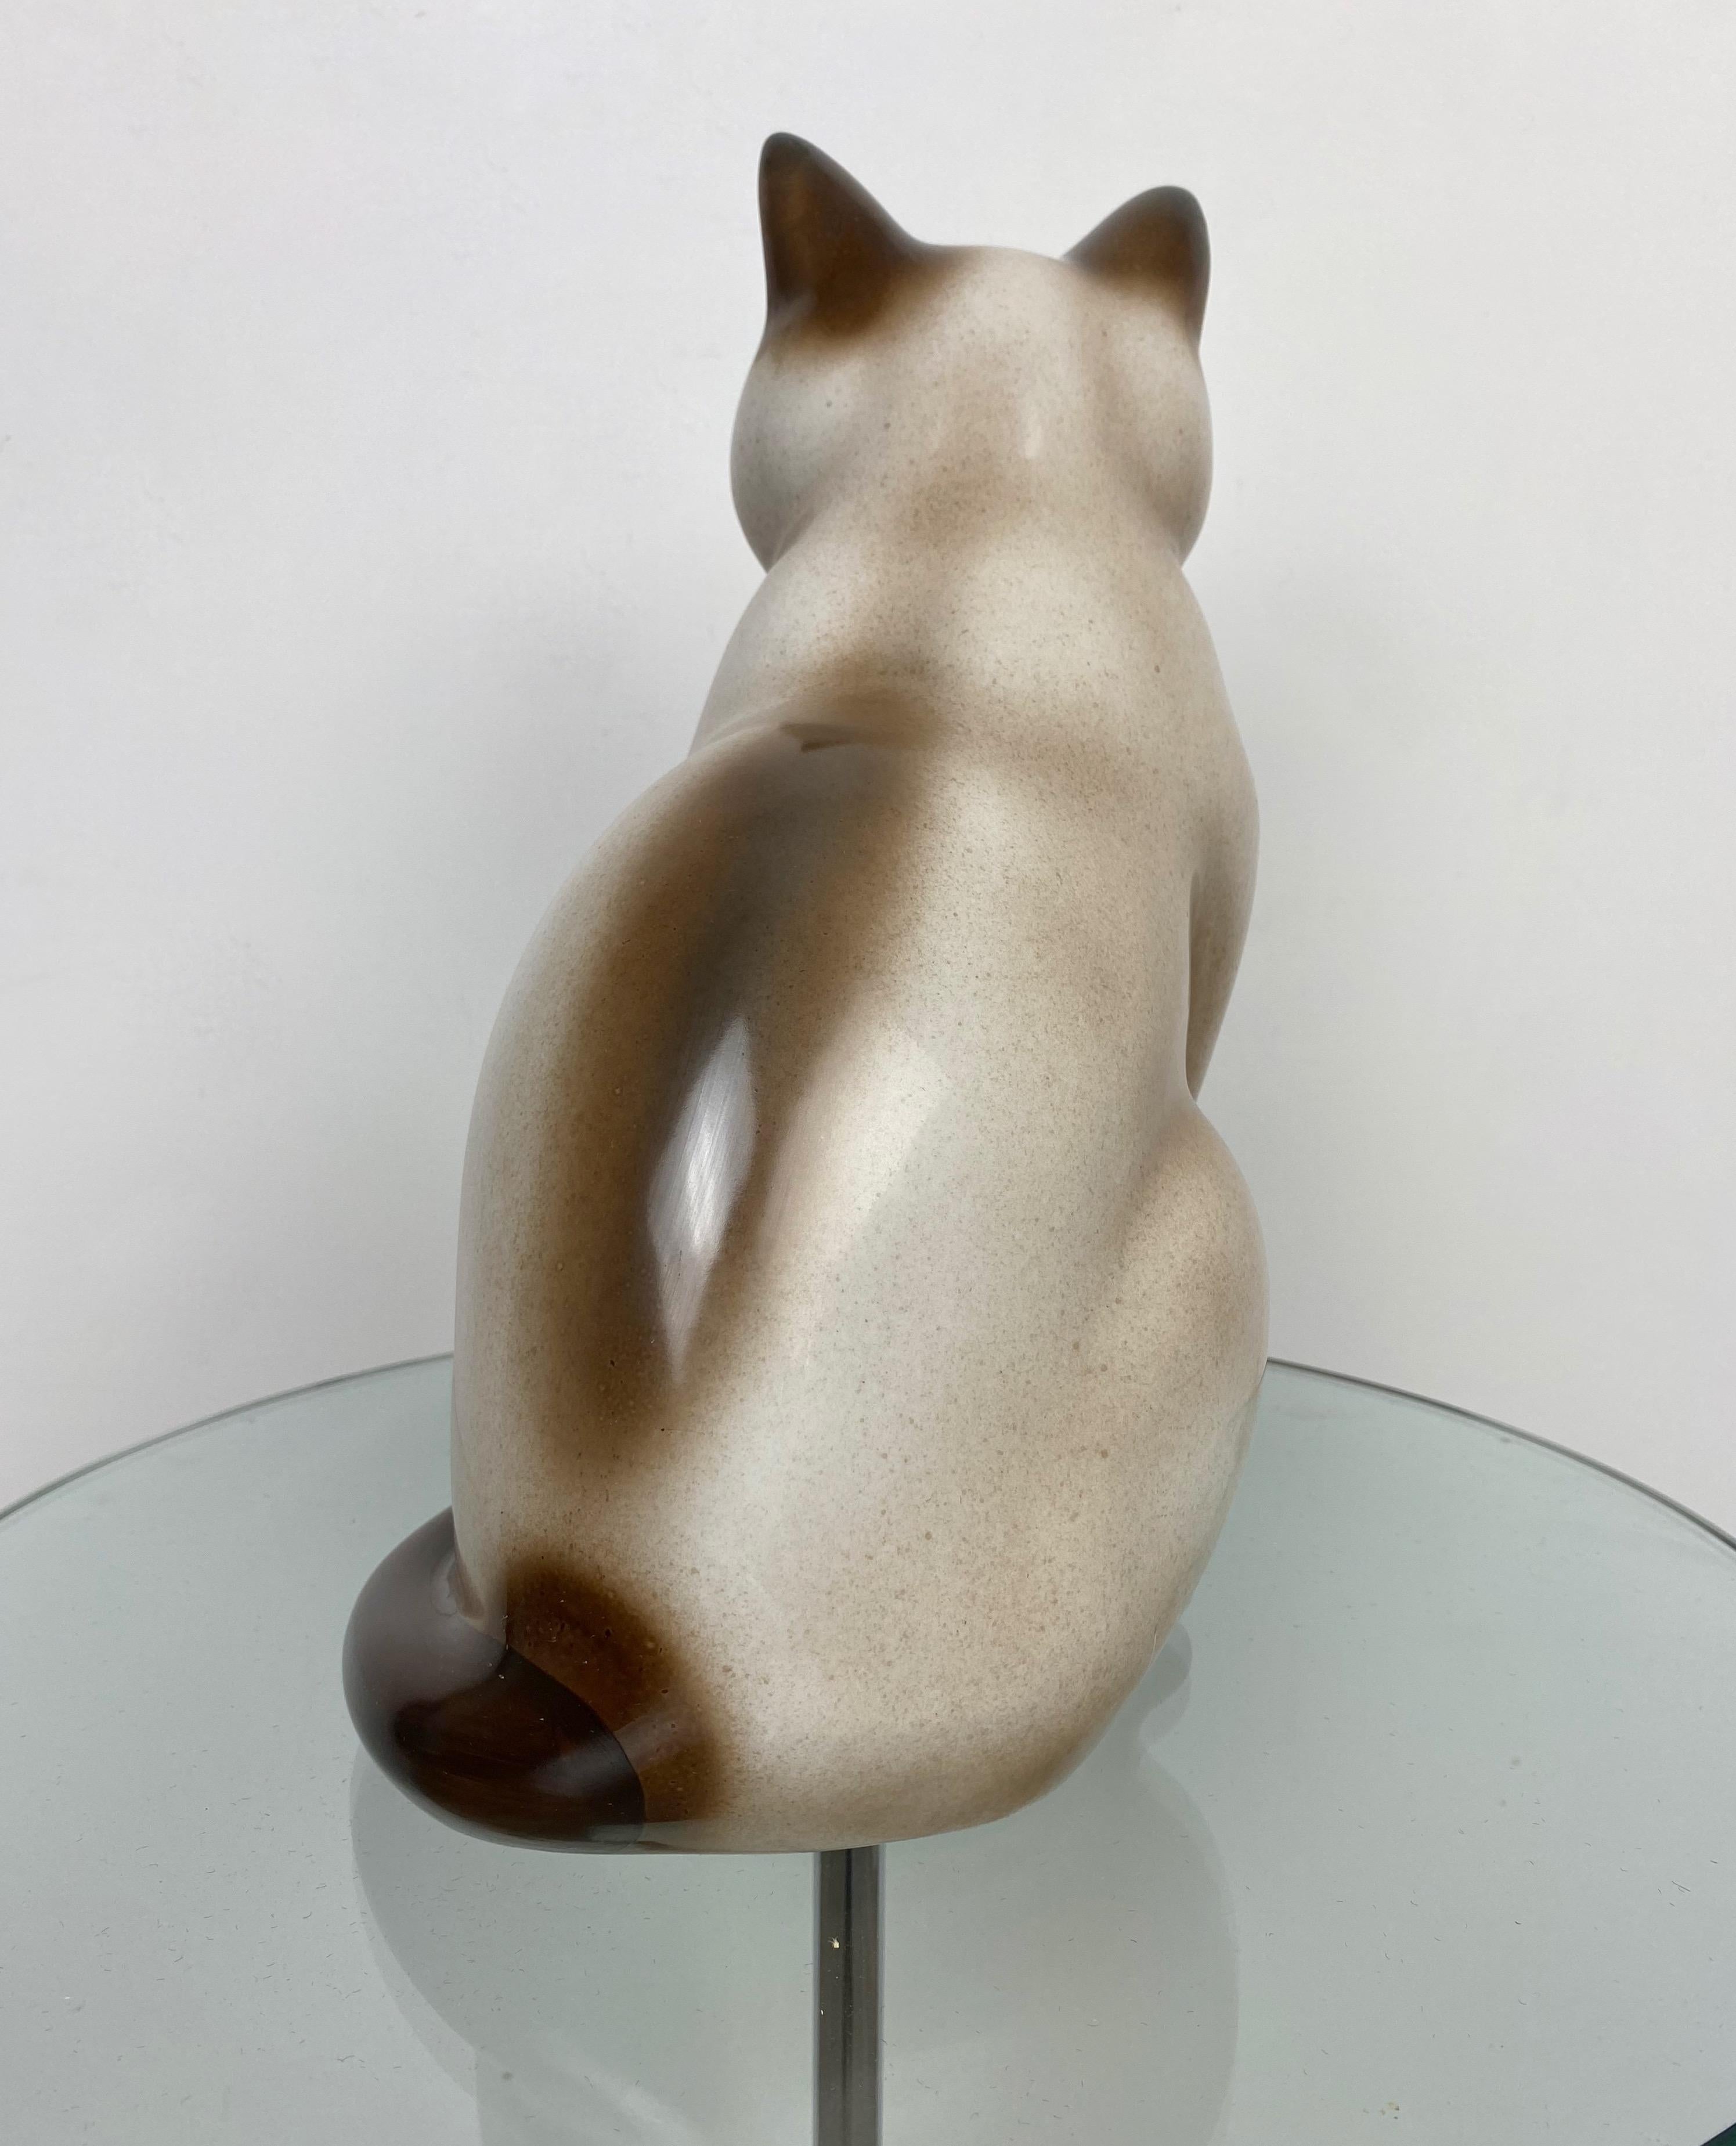 Mid-20th Century Siamese Cat Vintage Ceramic Sculpture by Piero Fornasetti 1960s Italy